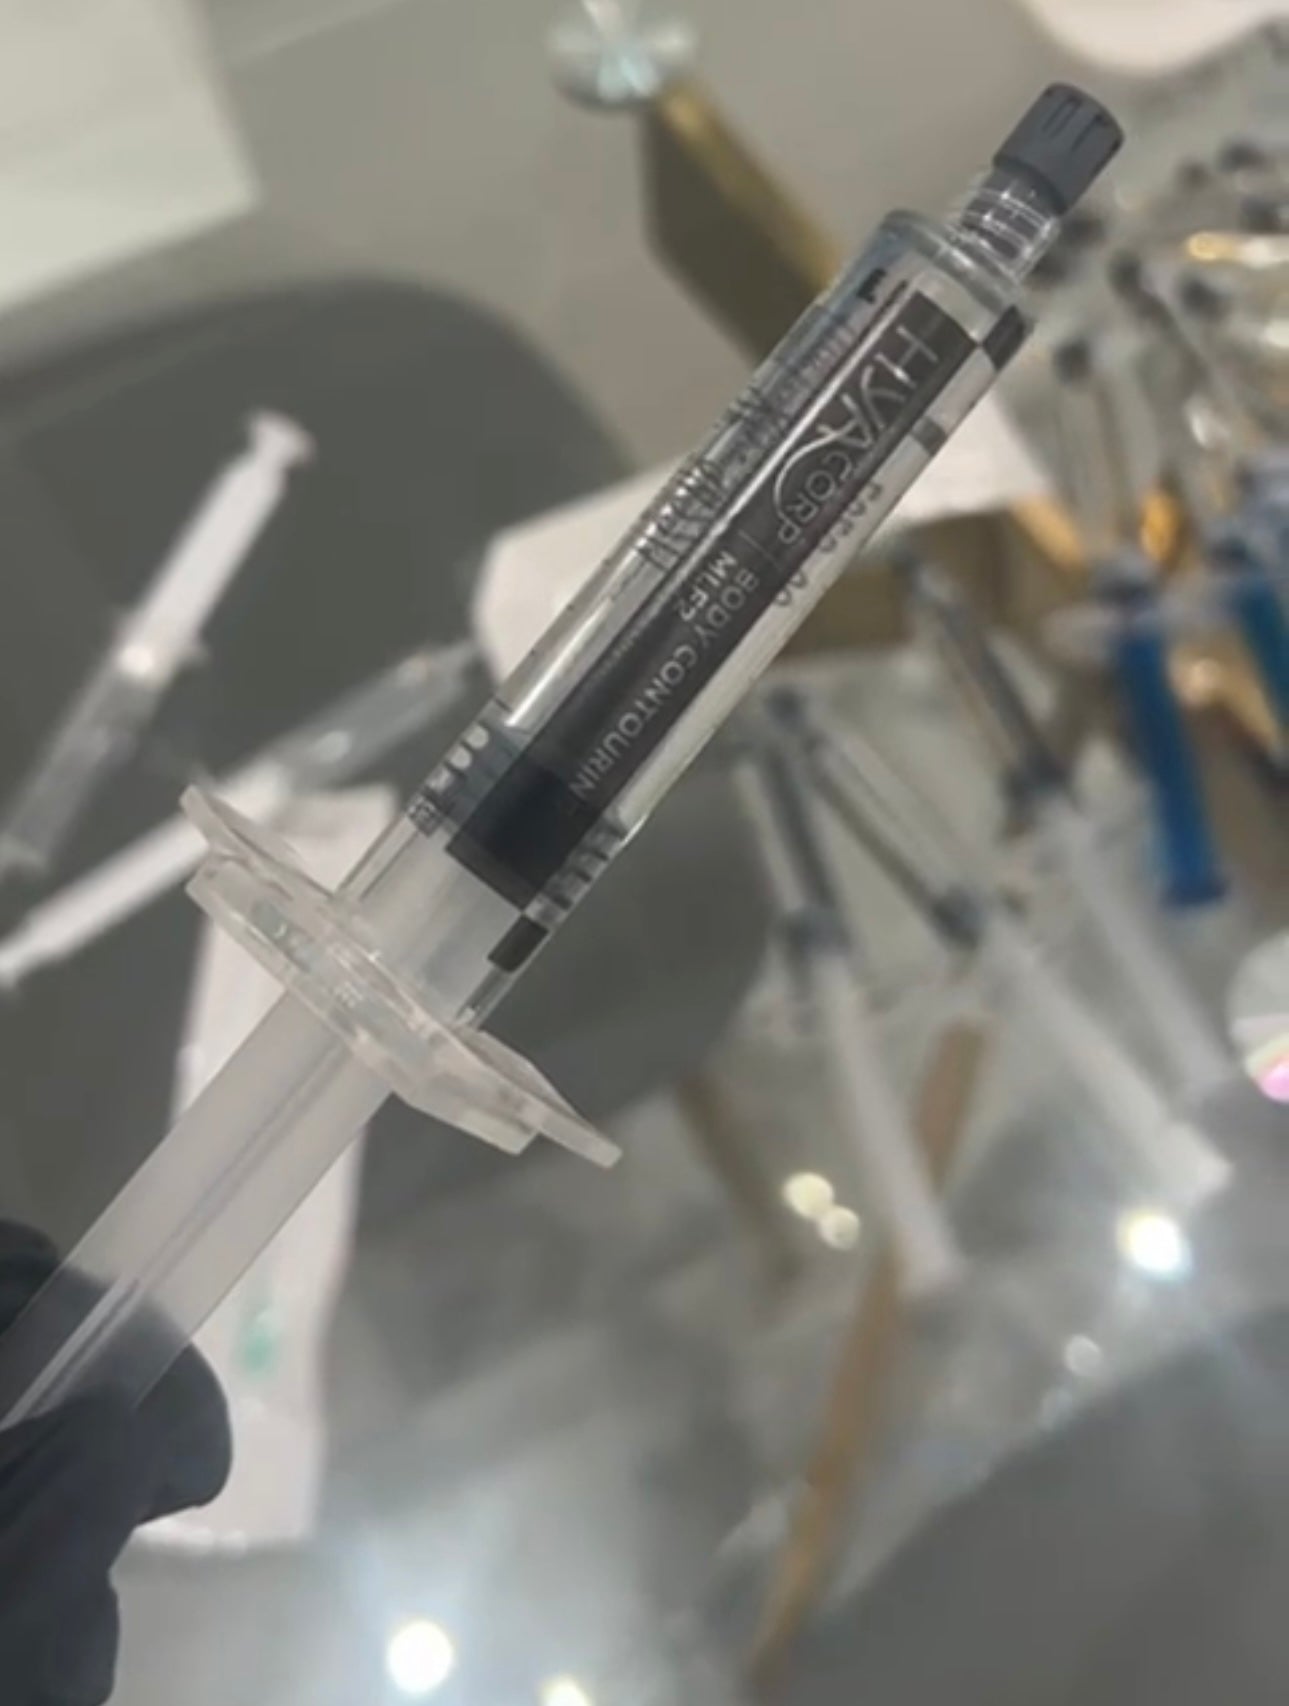 Hya Corp 10ml syringe